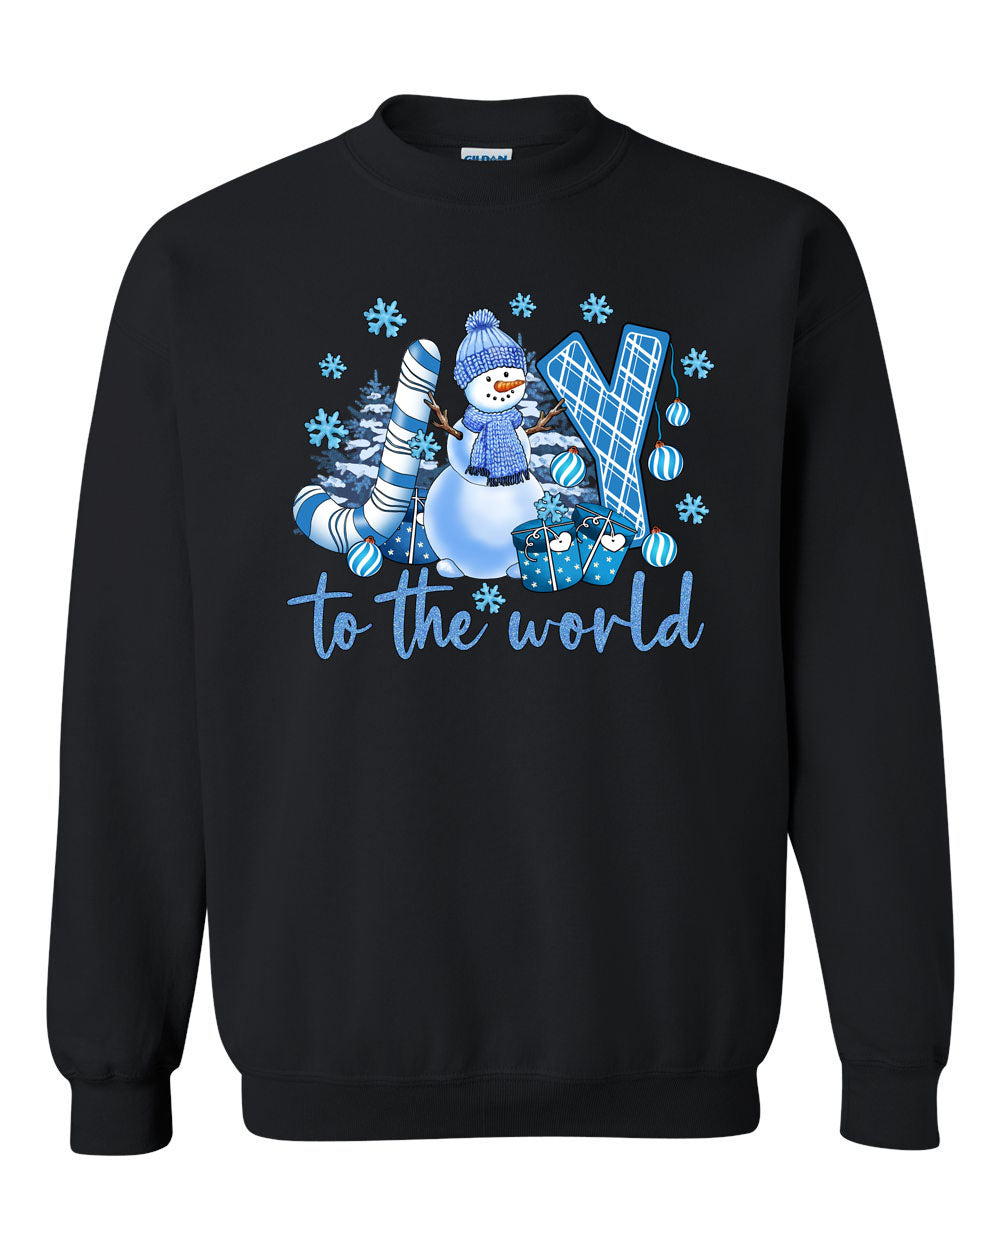 Joy To the World non hooded sweatshirt